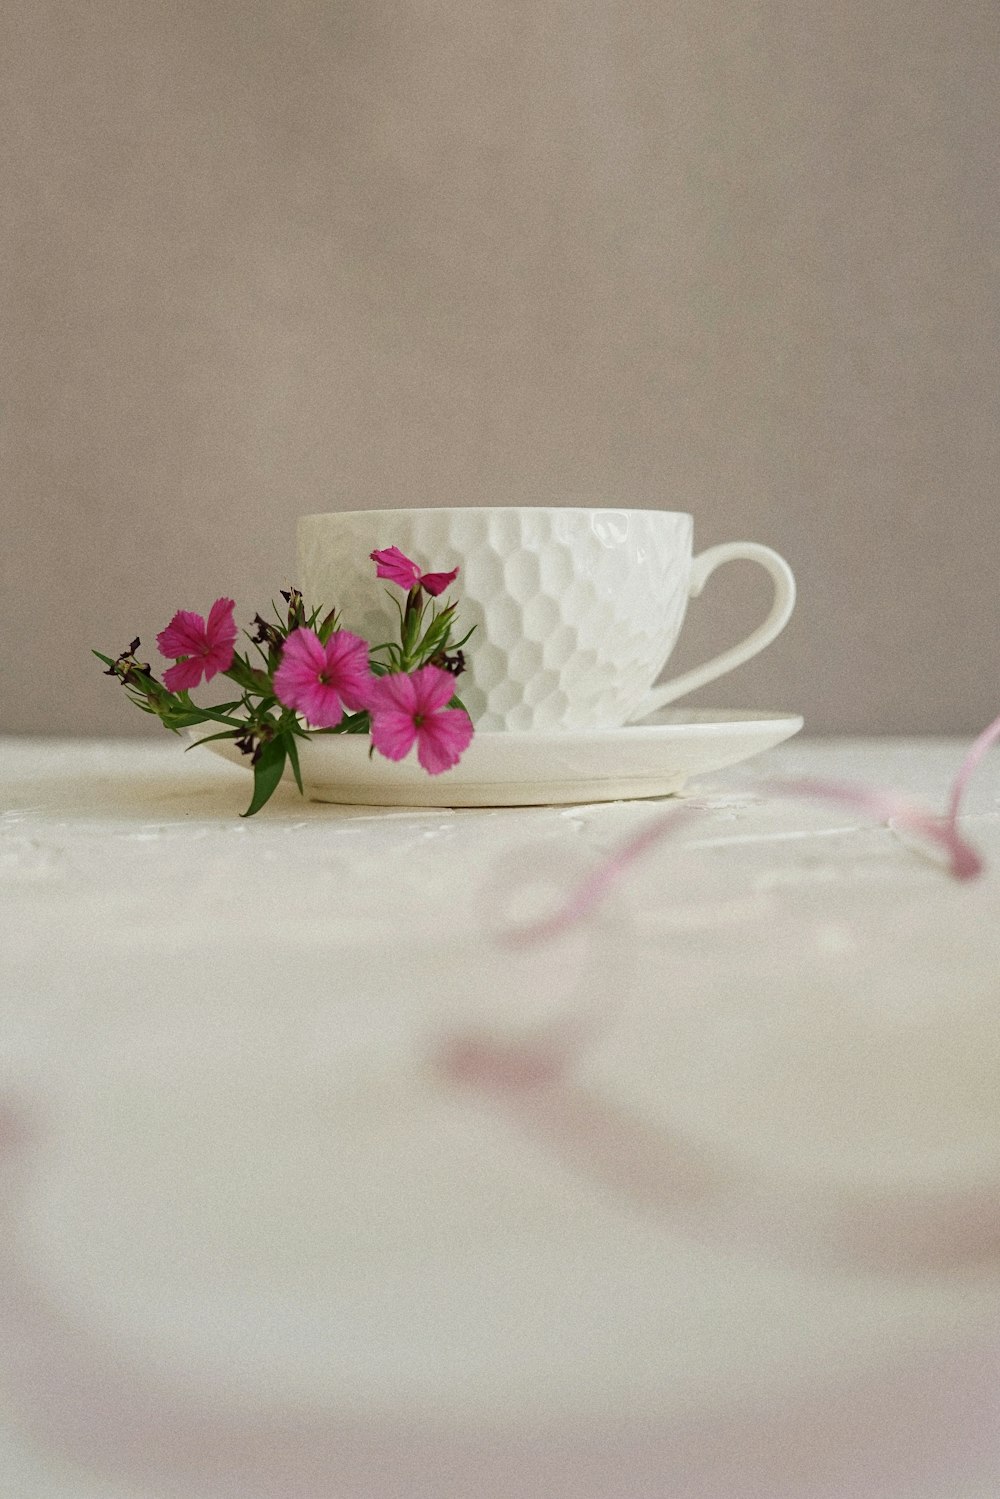 white ceramic teacup on saucer plate